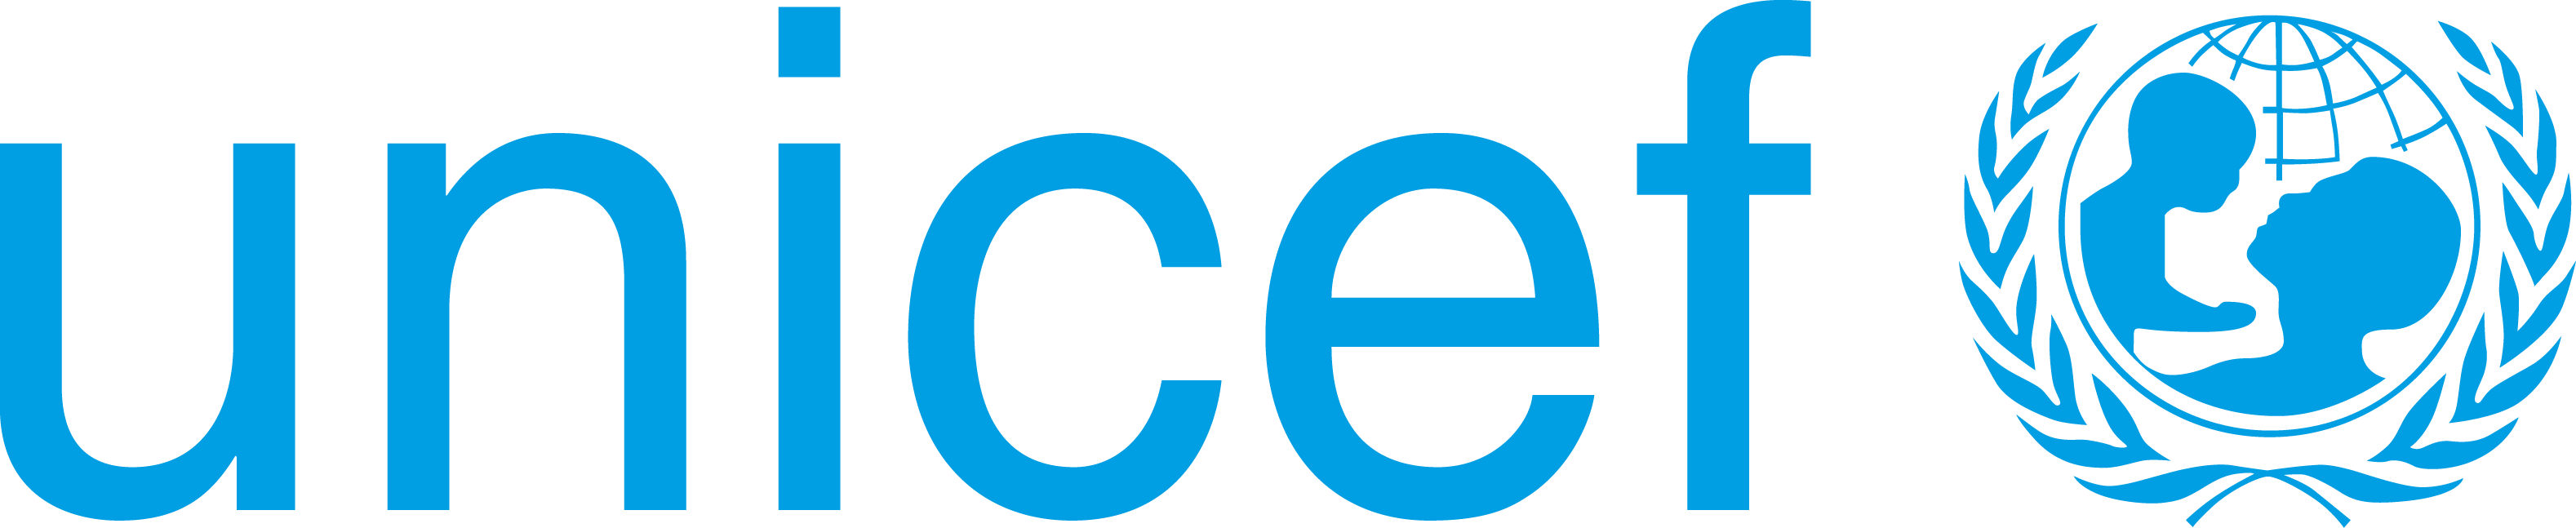 Unicef Logo Png : Blockchain and Dapp Development company | Blockchain ...